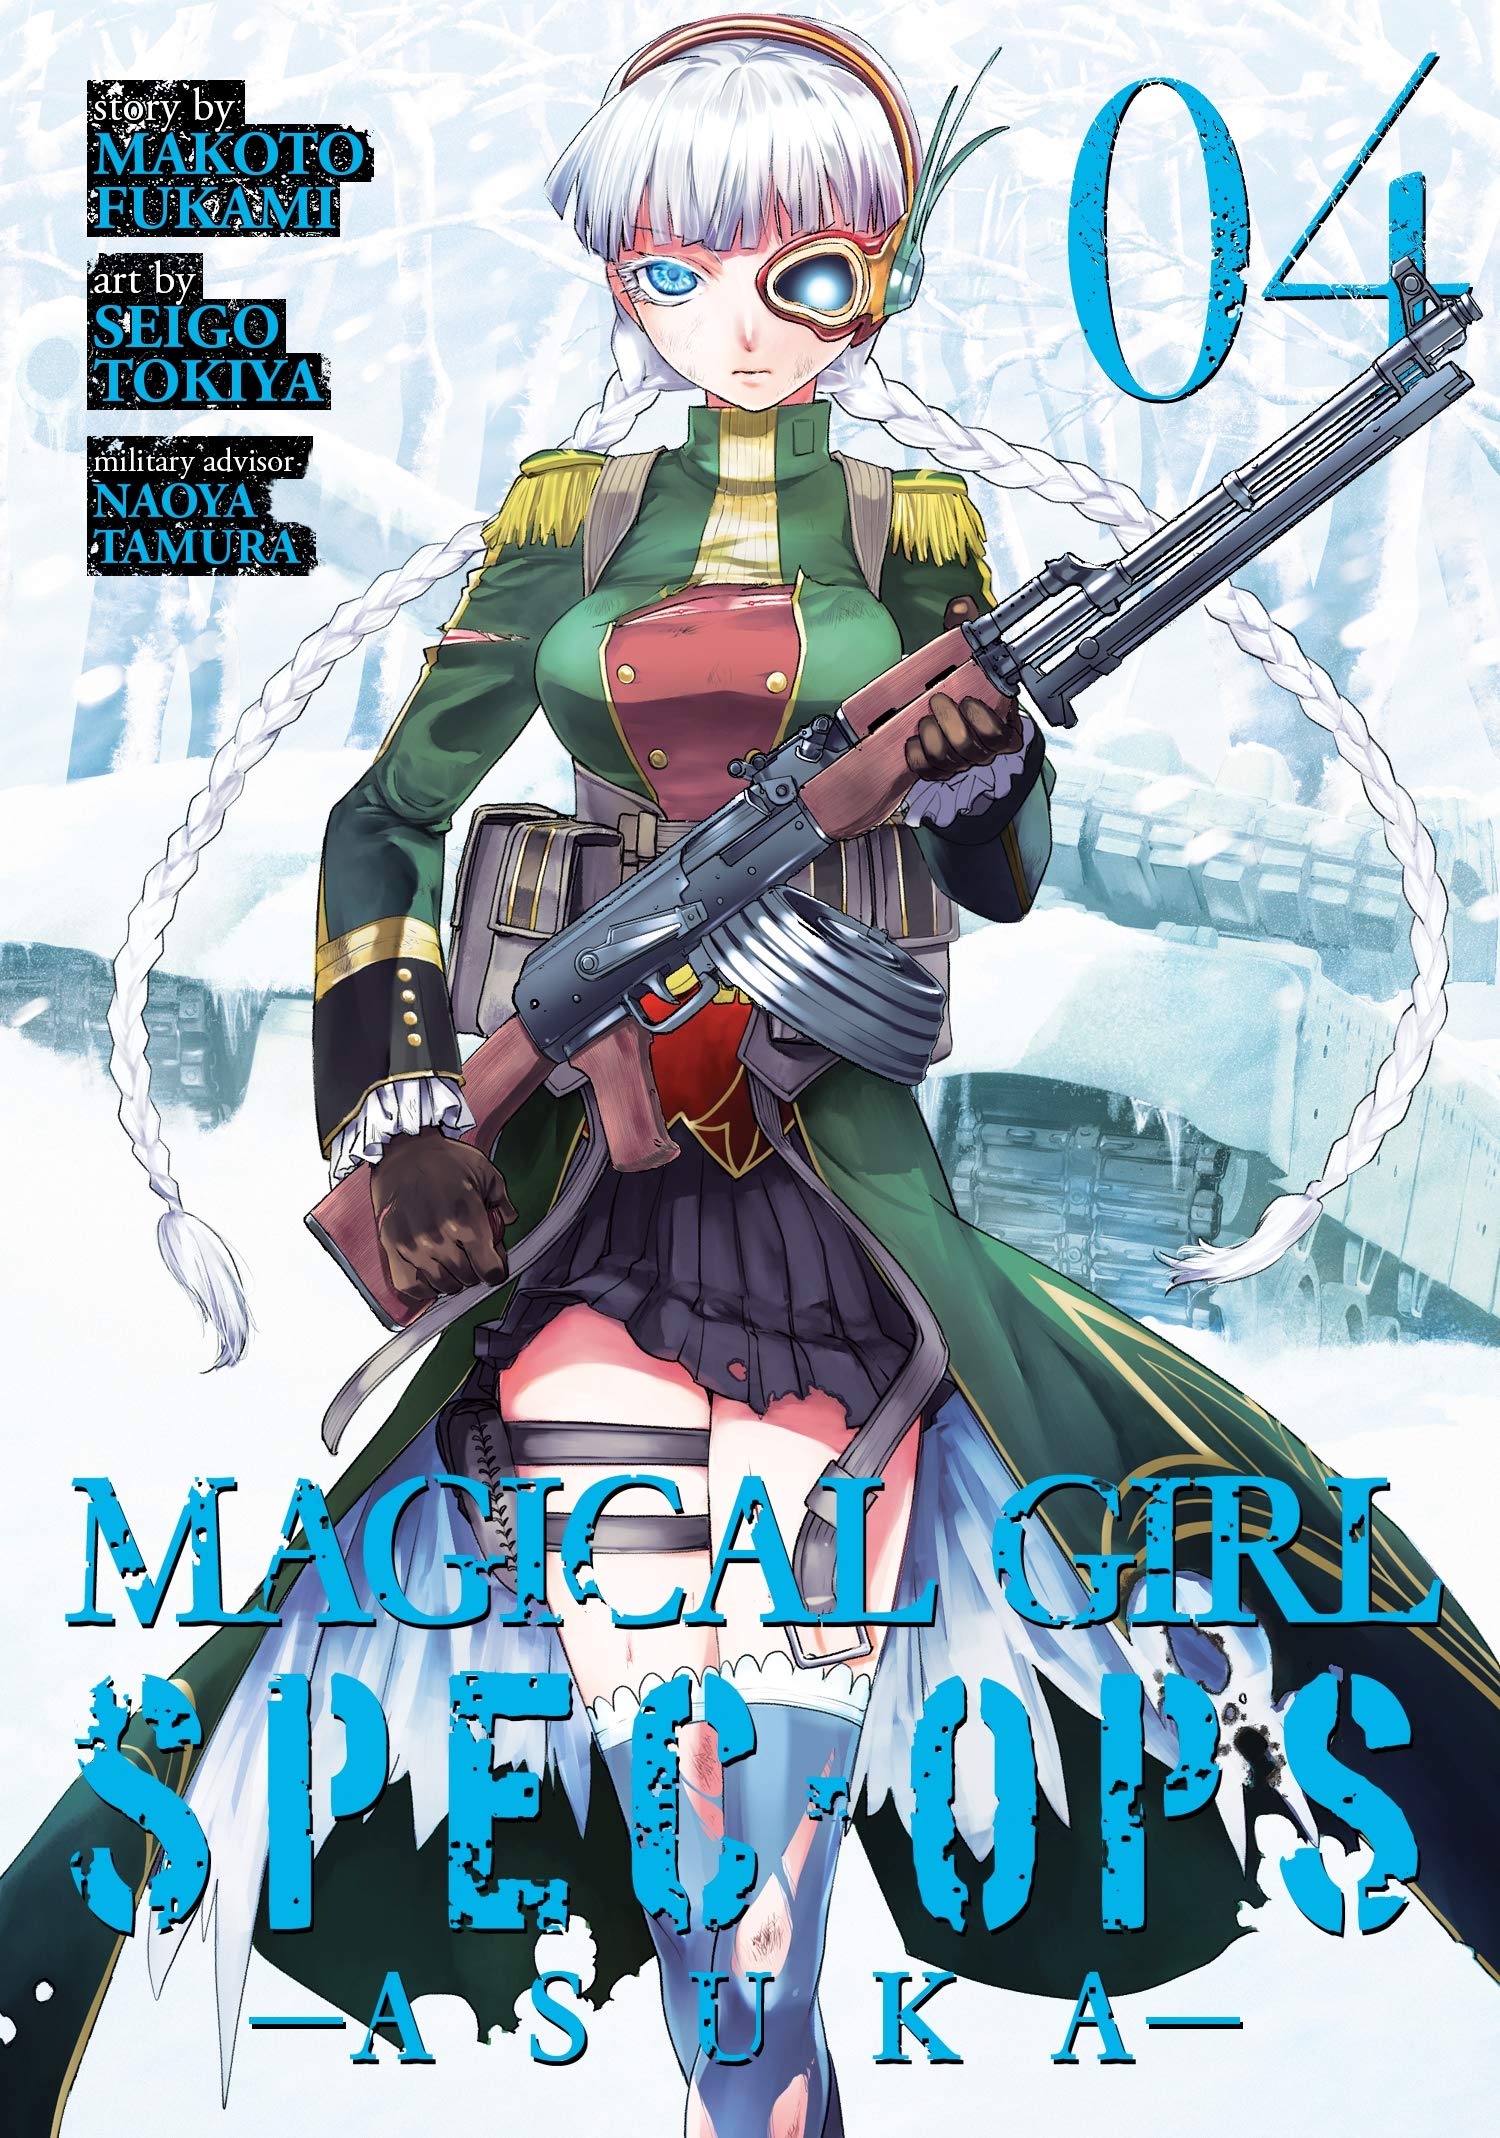 Magical Girl Spec-Ops Asuka, Magical Girl Specs Ops Asuka Wiki